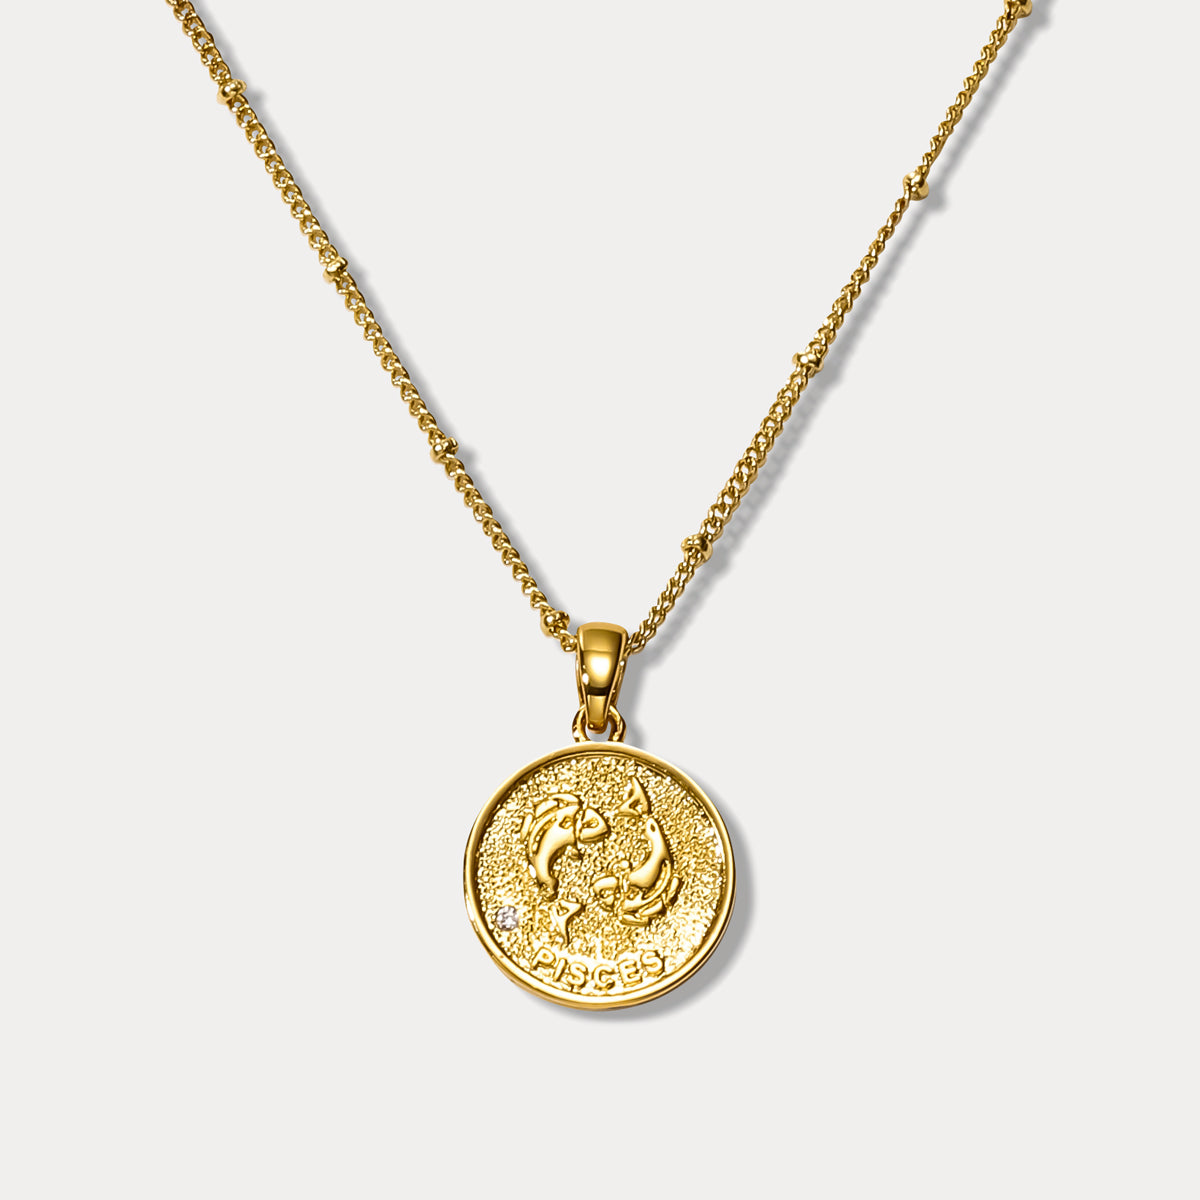 Selenichast pisces constellation coin pendant necklace